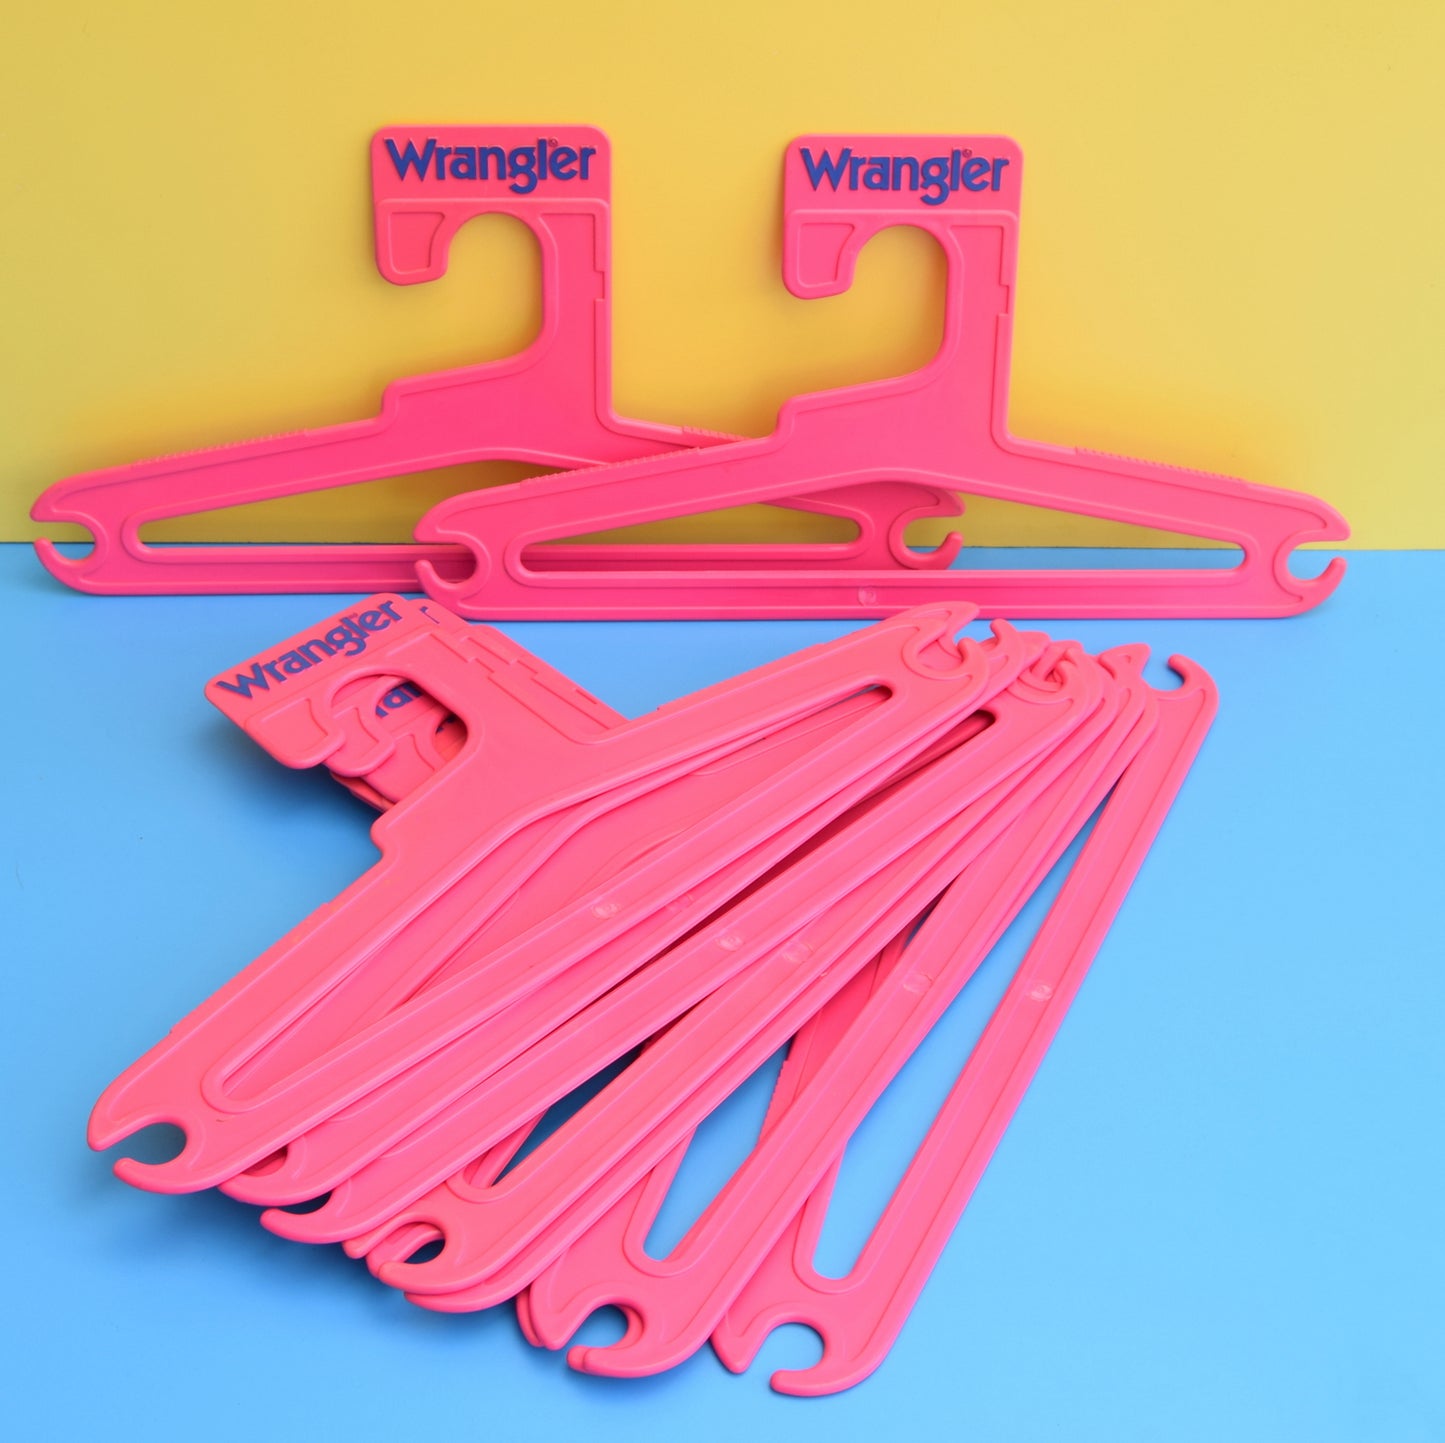 Vintage 1980s Plastic Clothes Hangers - Wrangler - Pink x5